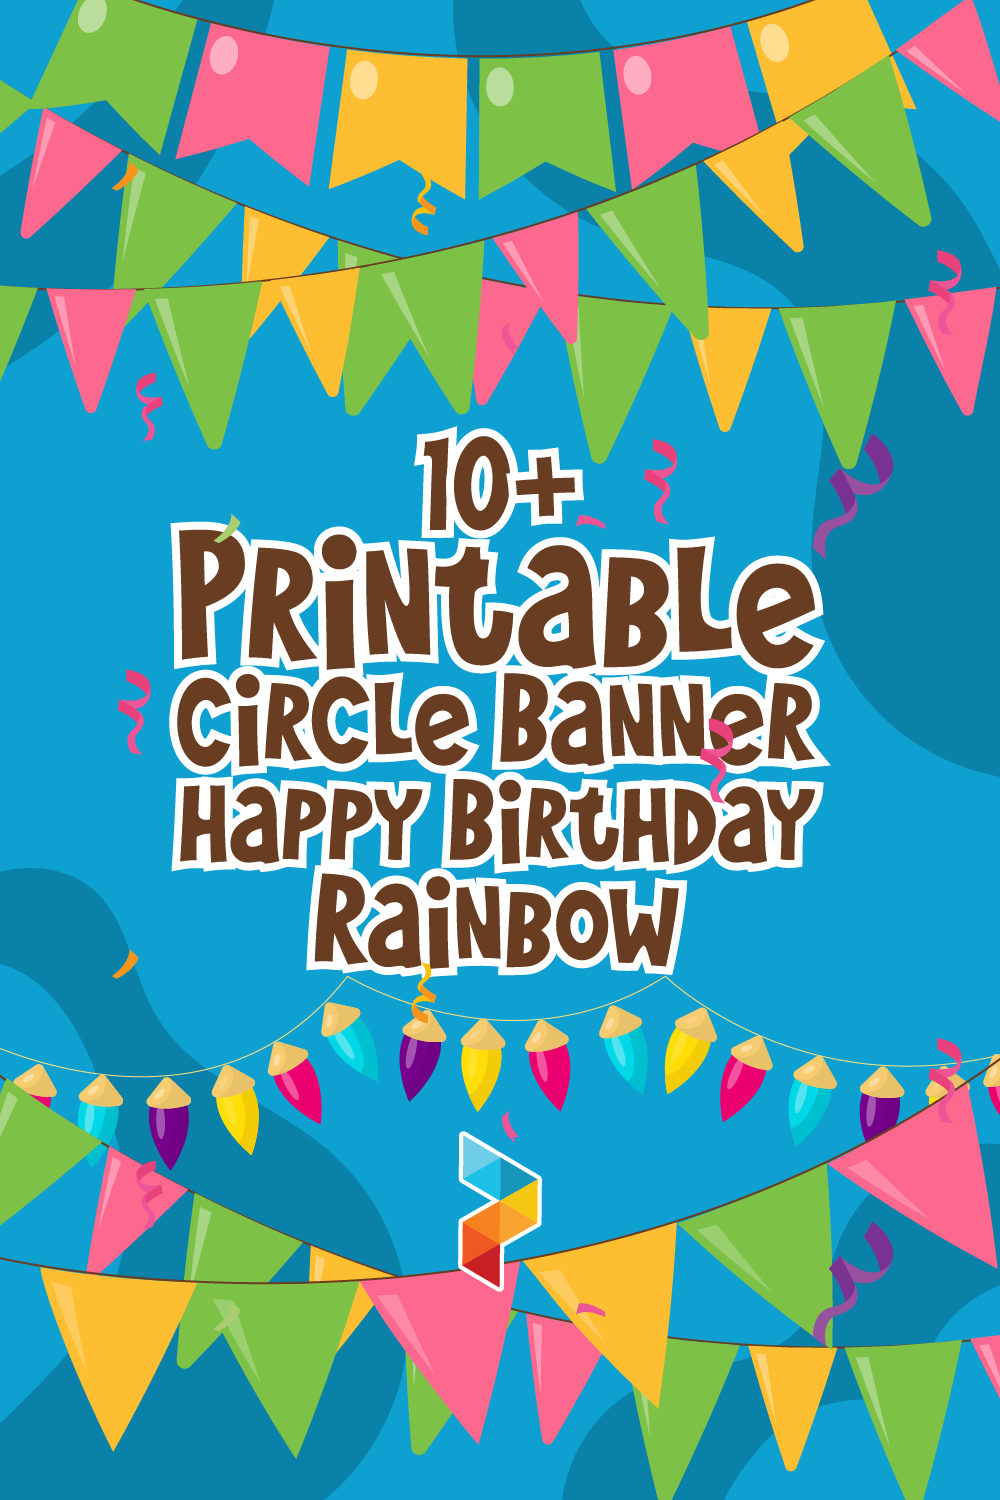 Circle Banner Happy Birthday Rainbow